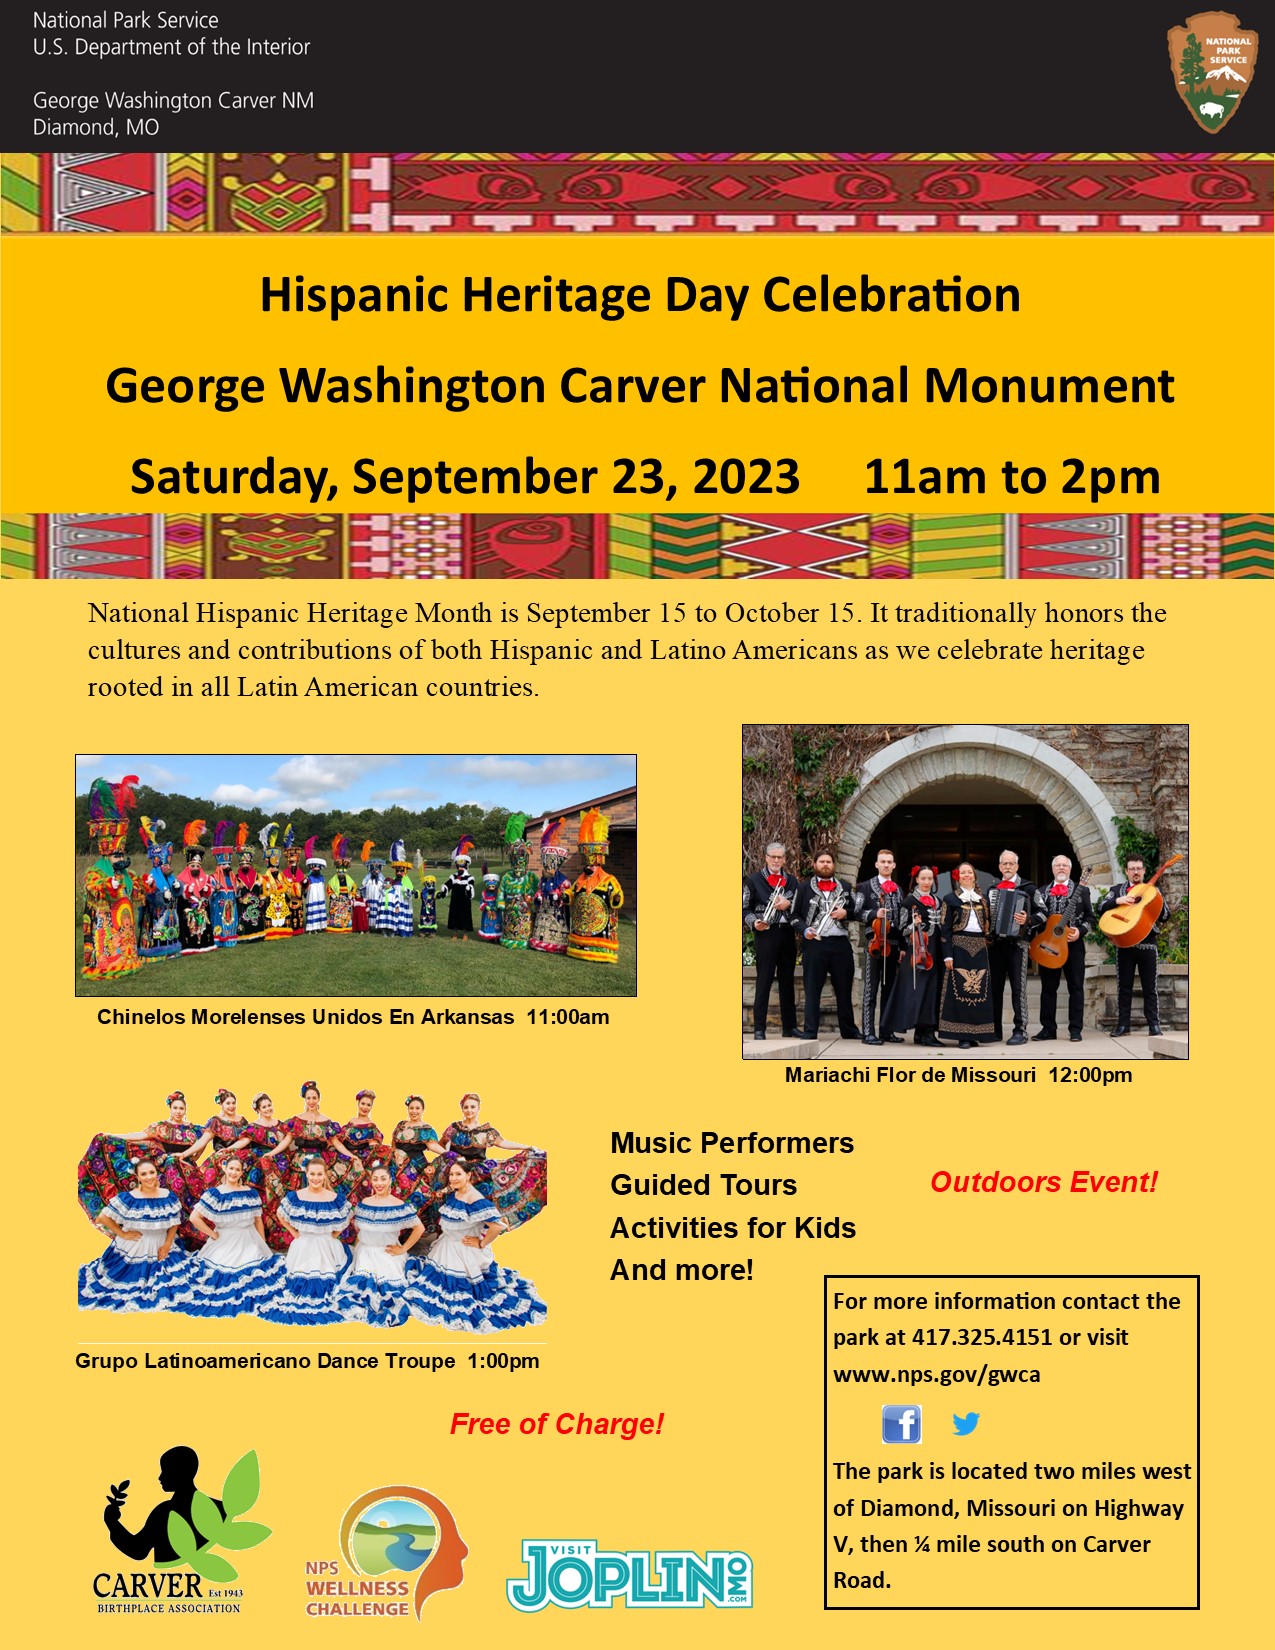 Three photographs of performing groups for Hispanic Heritage Day Celebration.